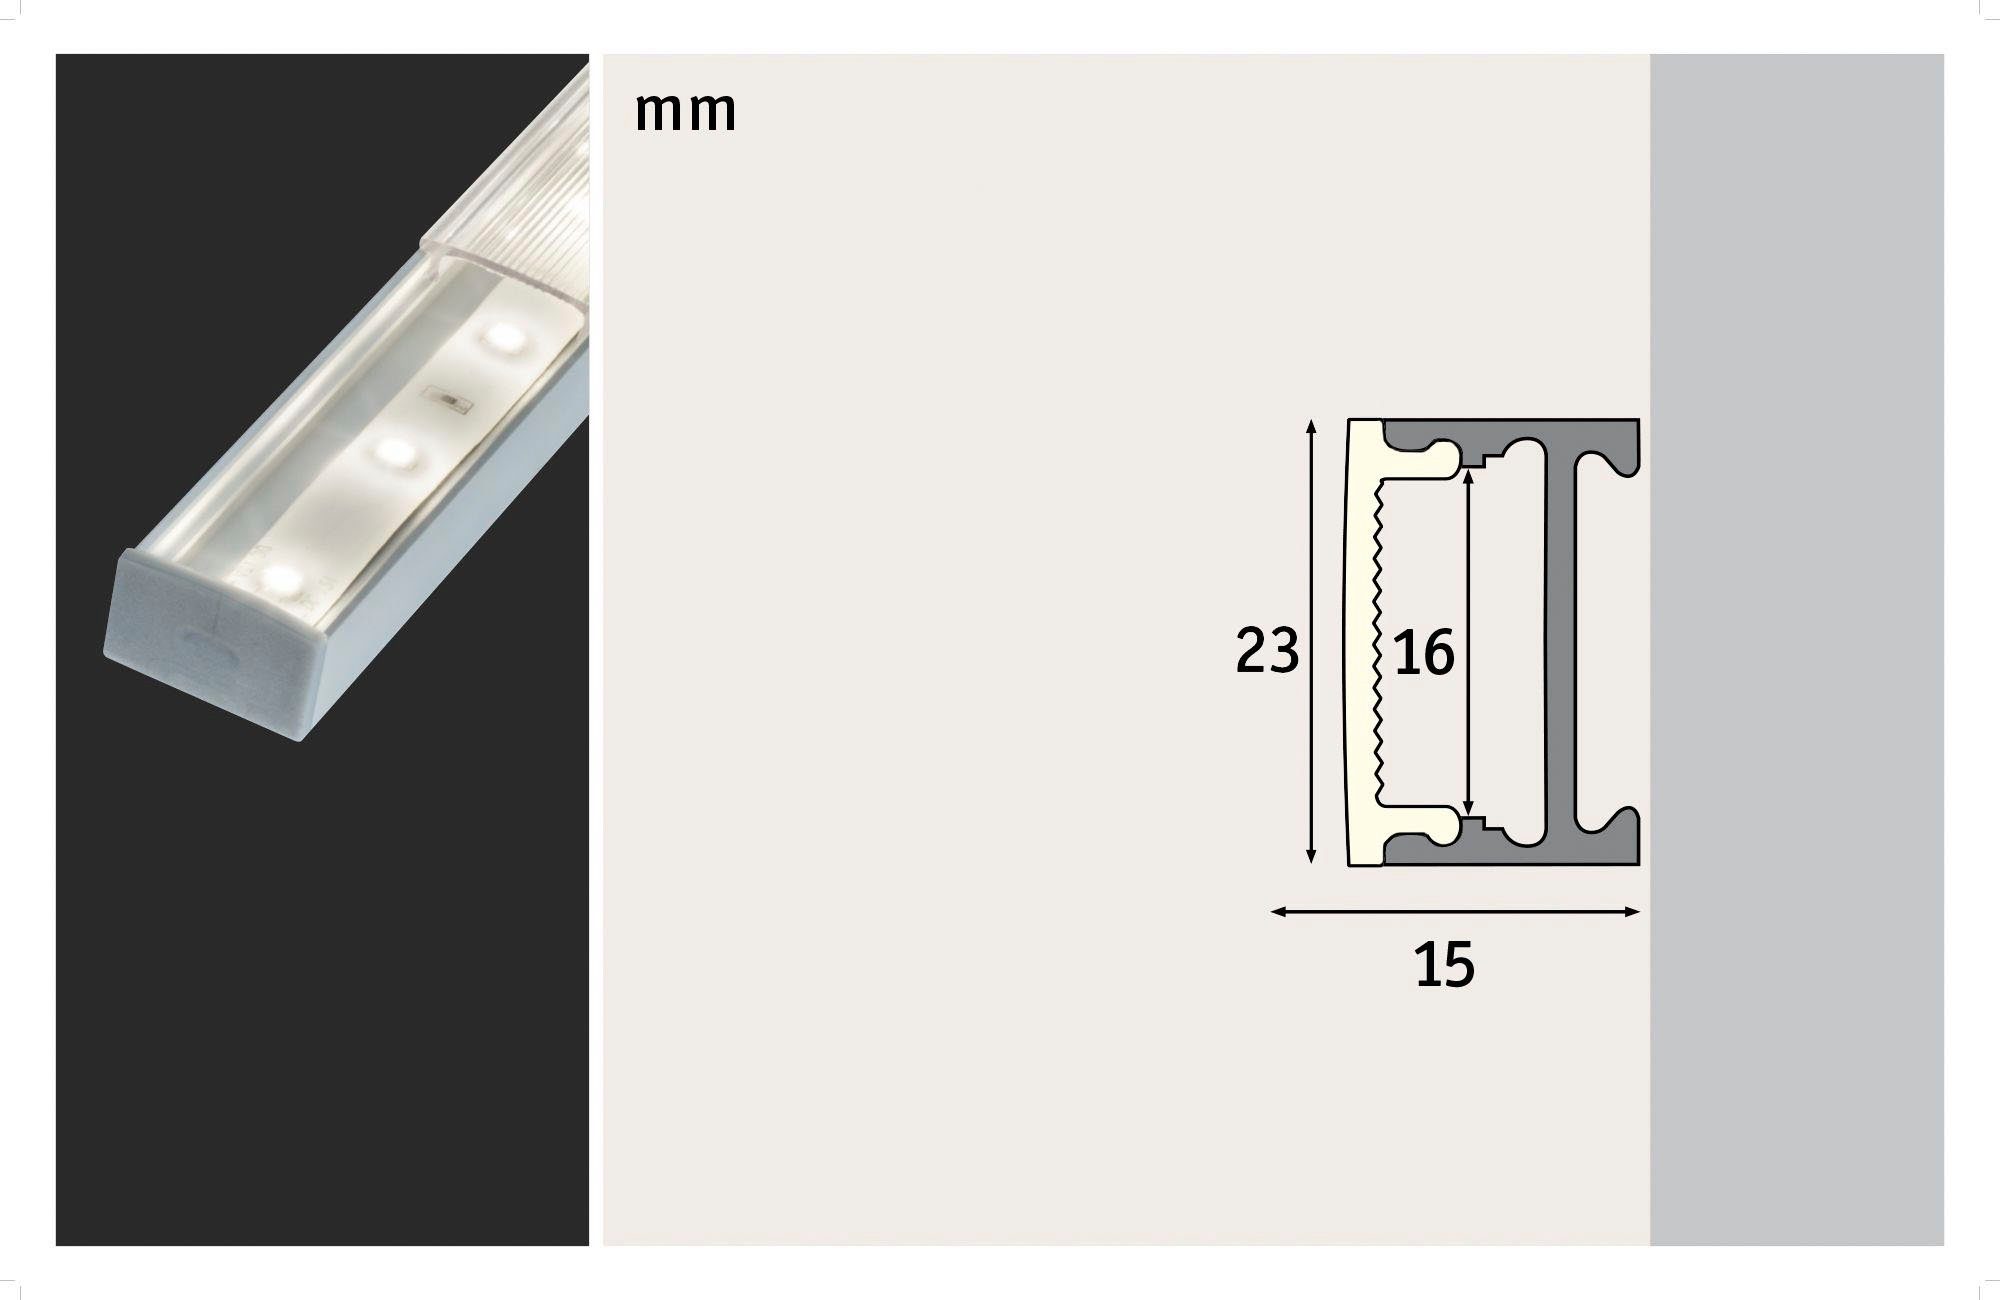 Paulmann LED-Streifen Diffusor eloxiert mit Square 1m Alu Profil